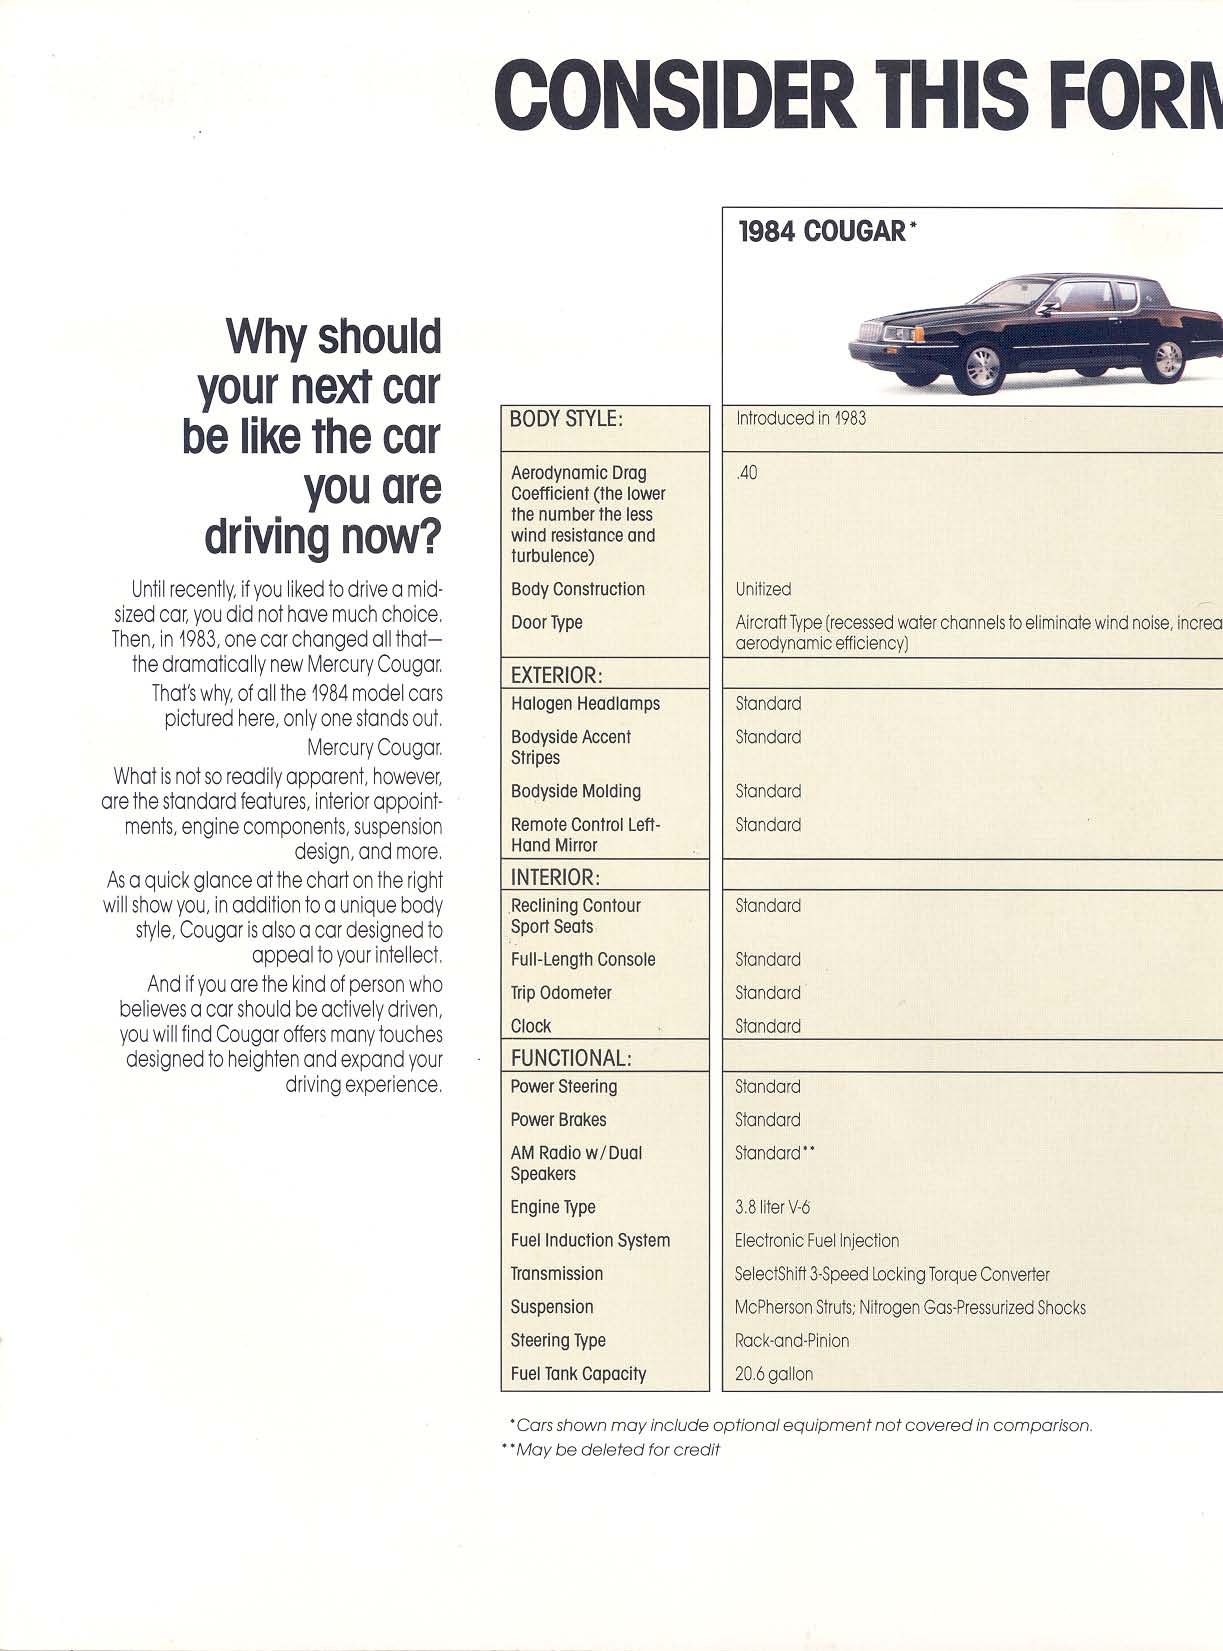 1984 Mercury Cougar Comparison Report Page 2